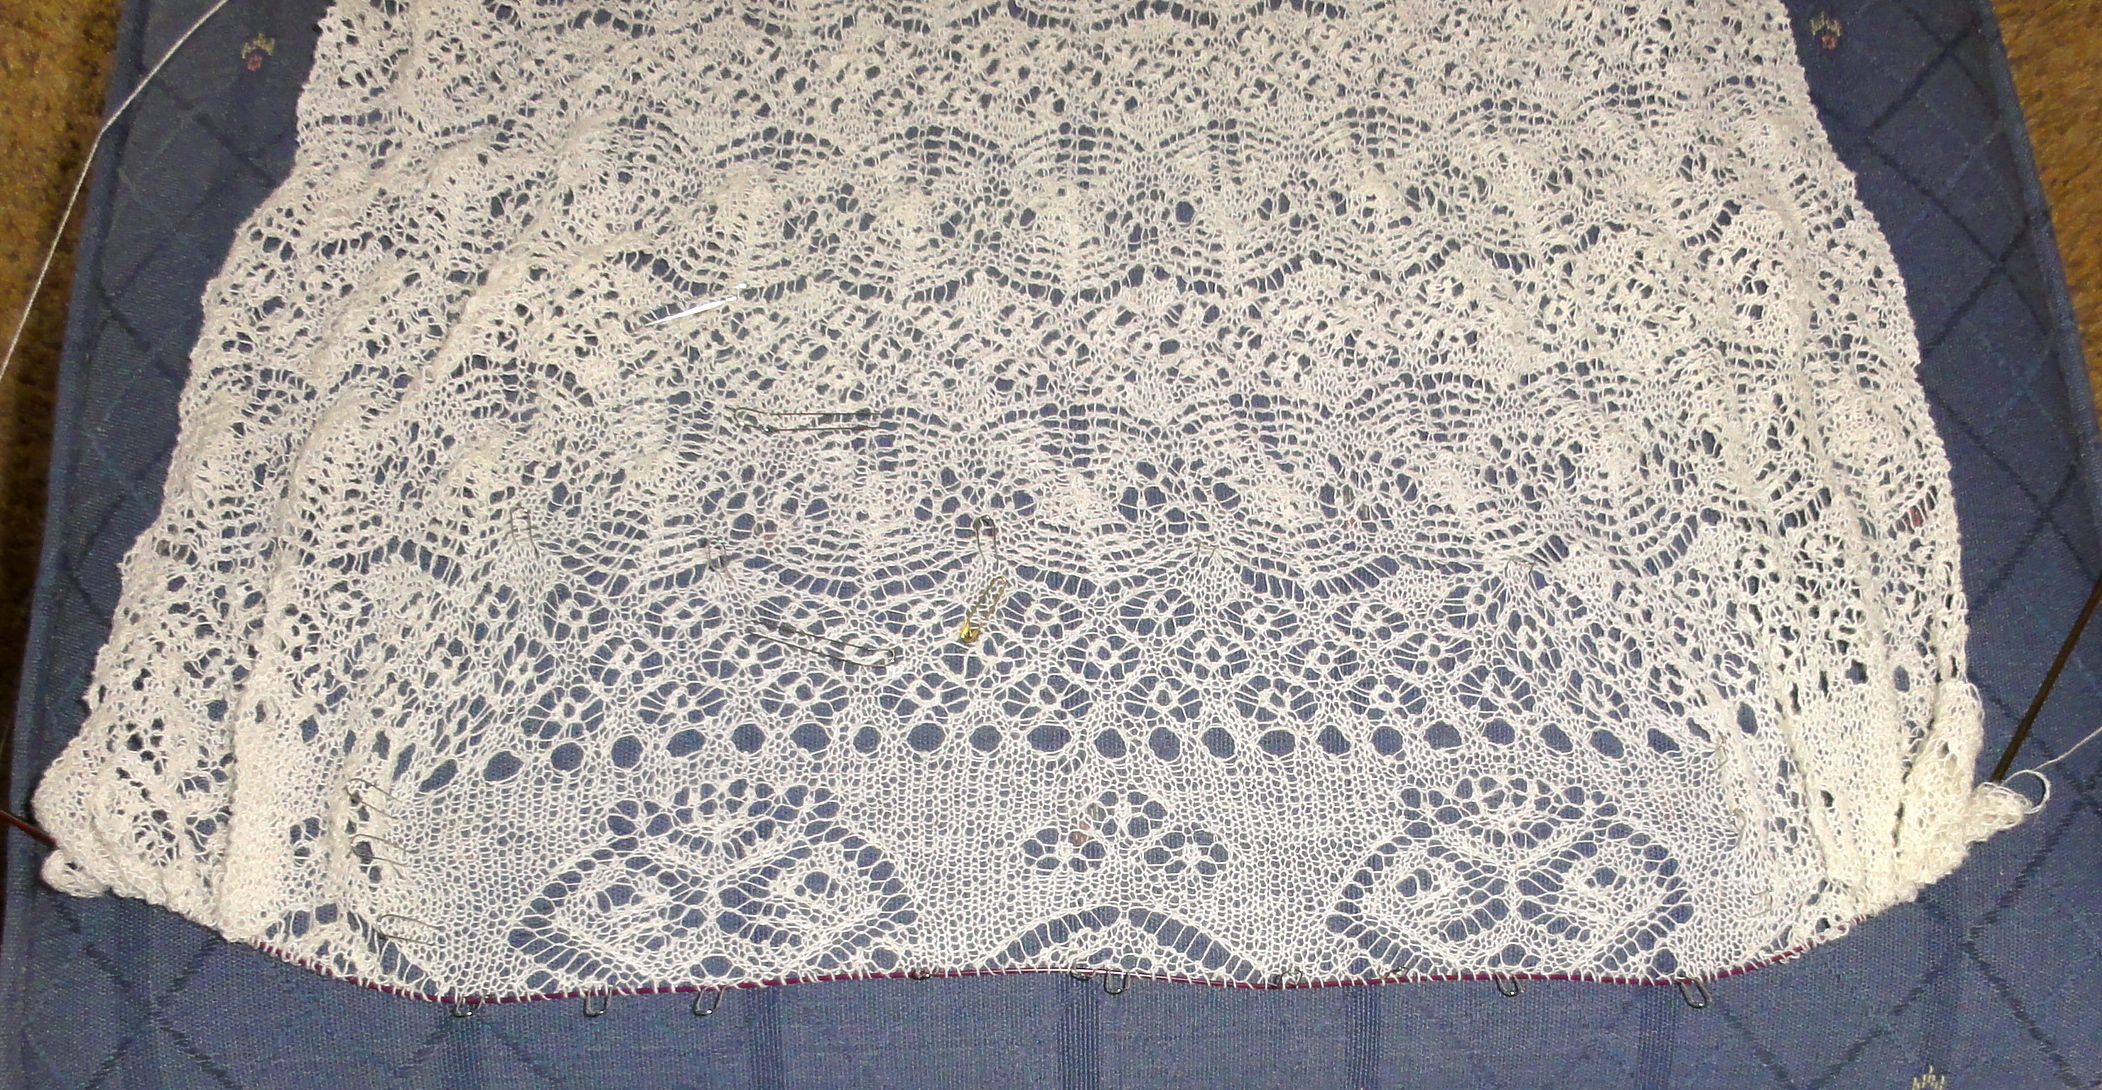 Shetland Lace Knitting From Charts By Hazel Carter